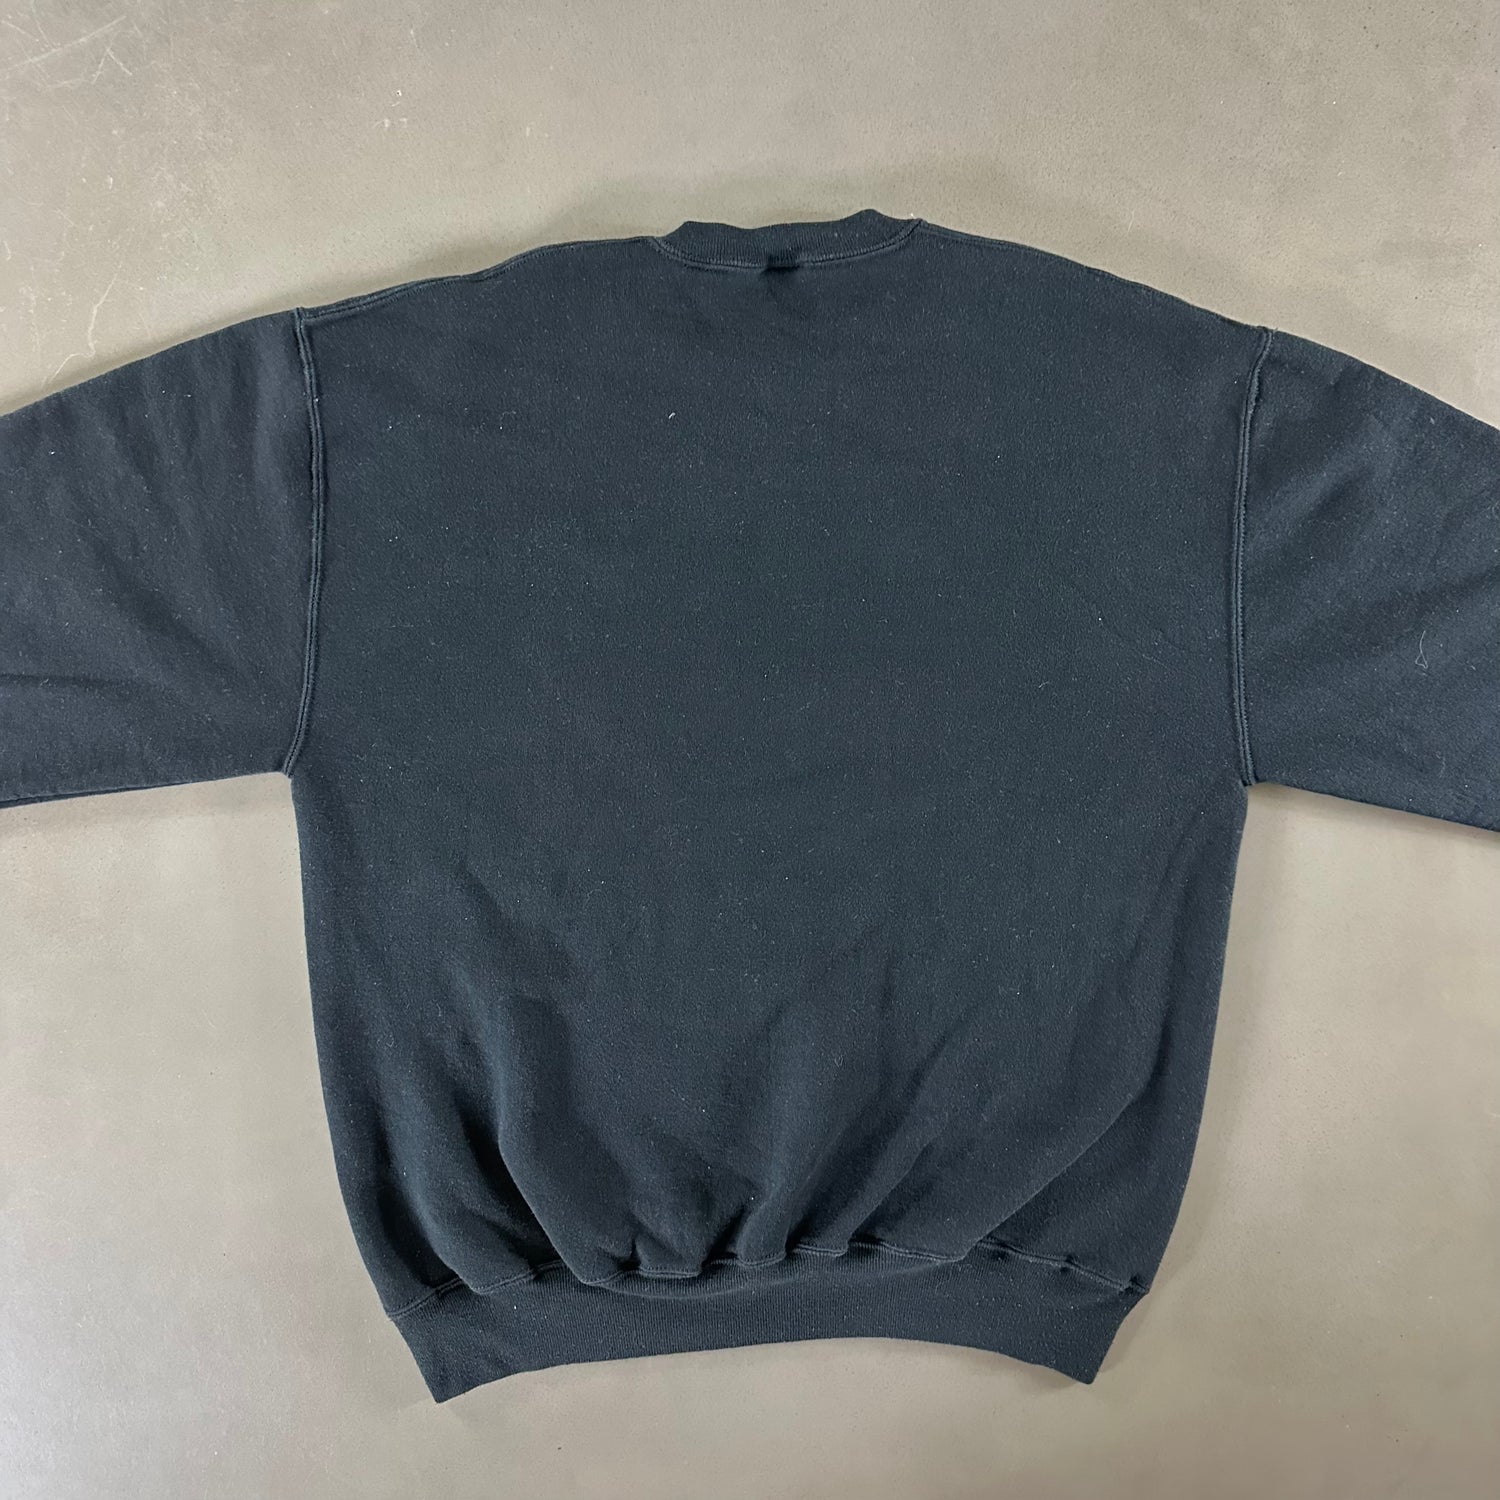 Vintage 1990s Atlanta Falcons Sweatshirt size XL